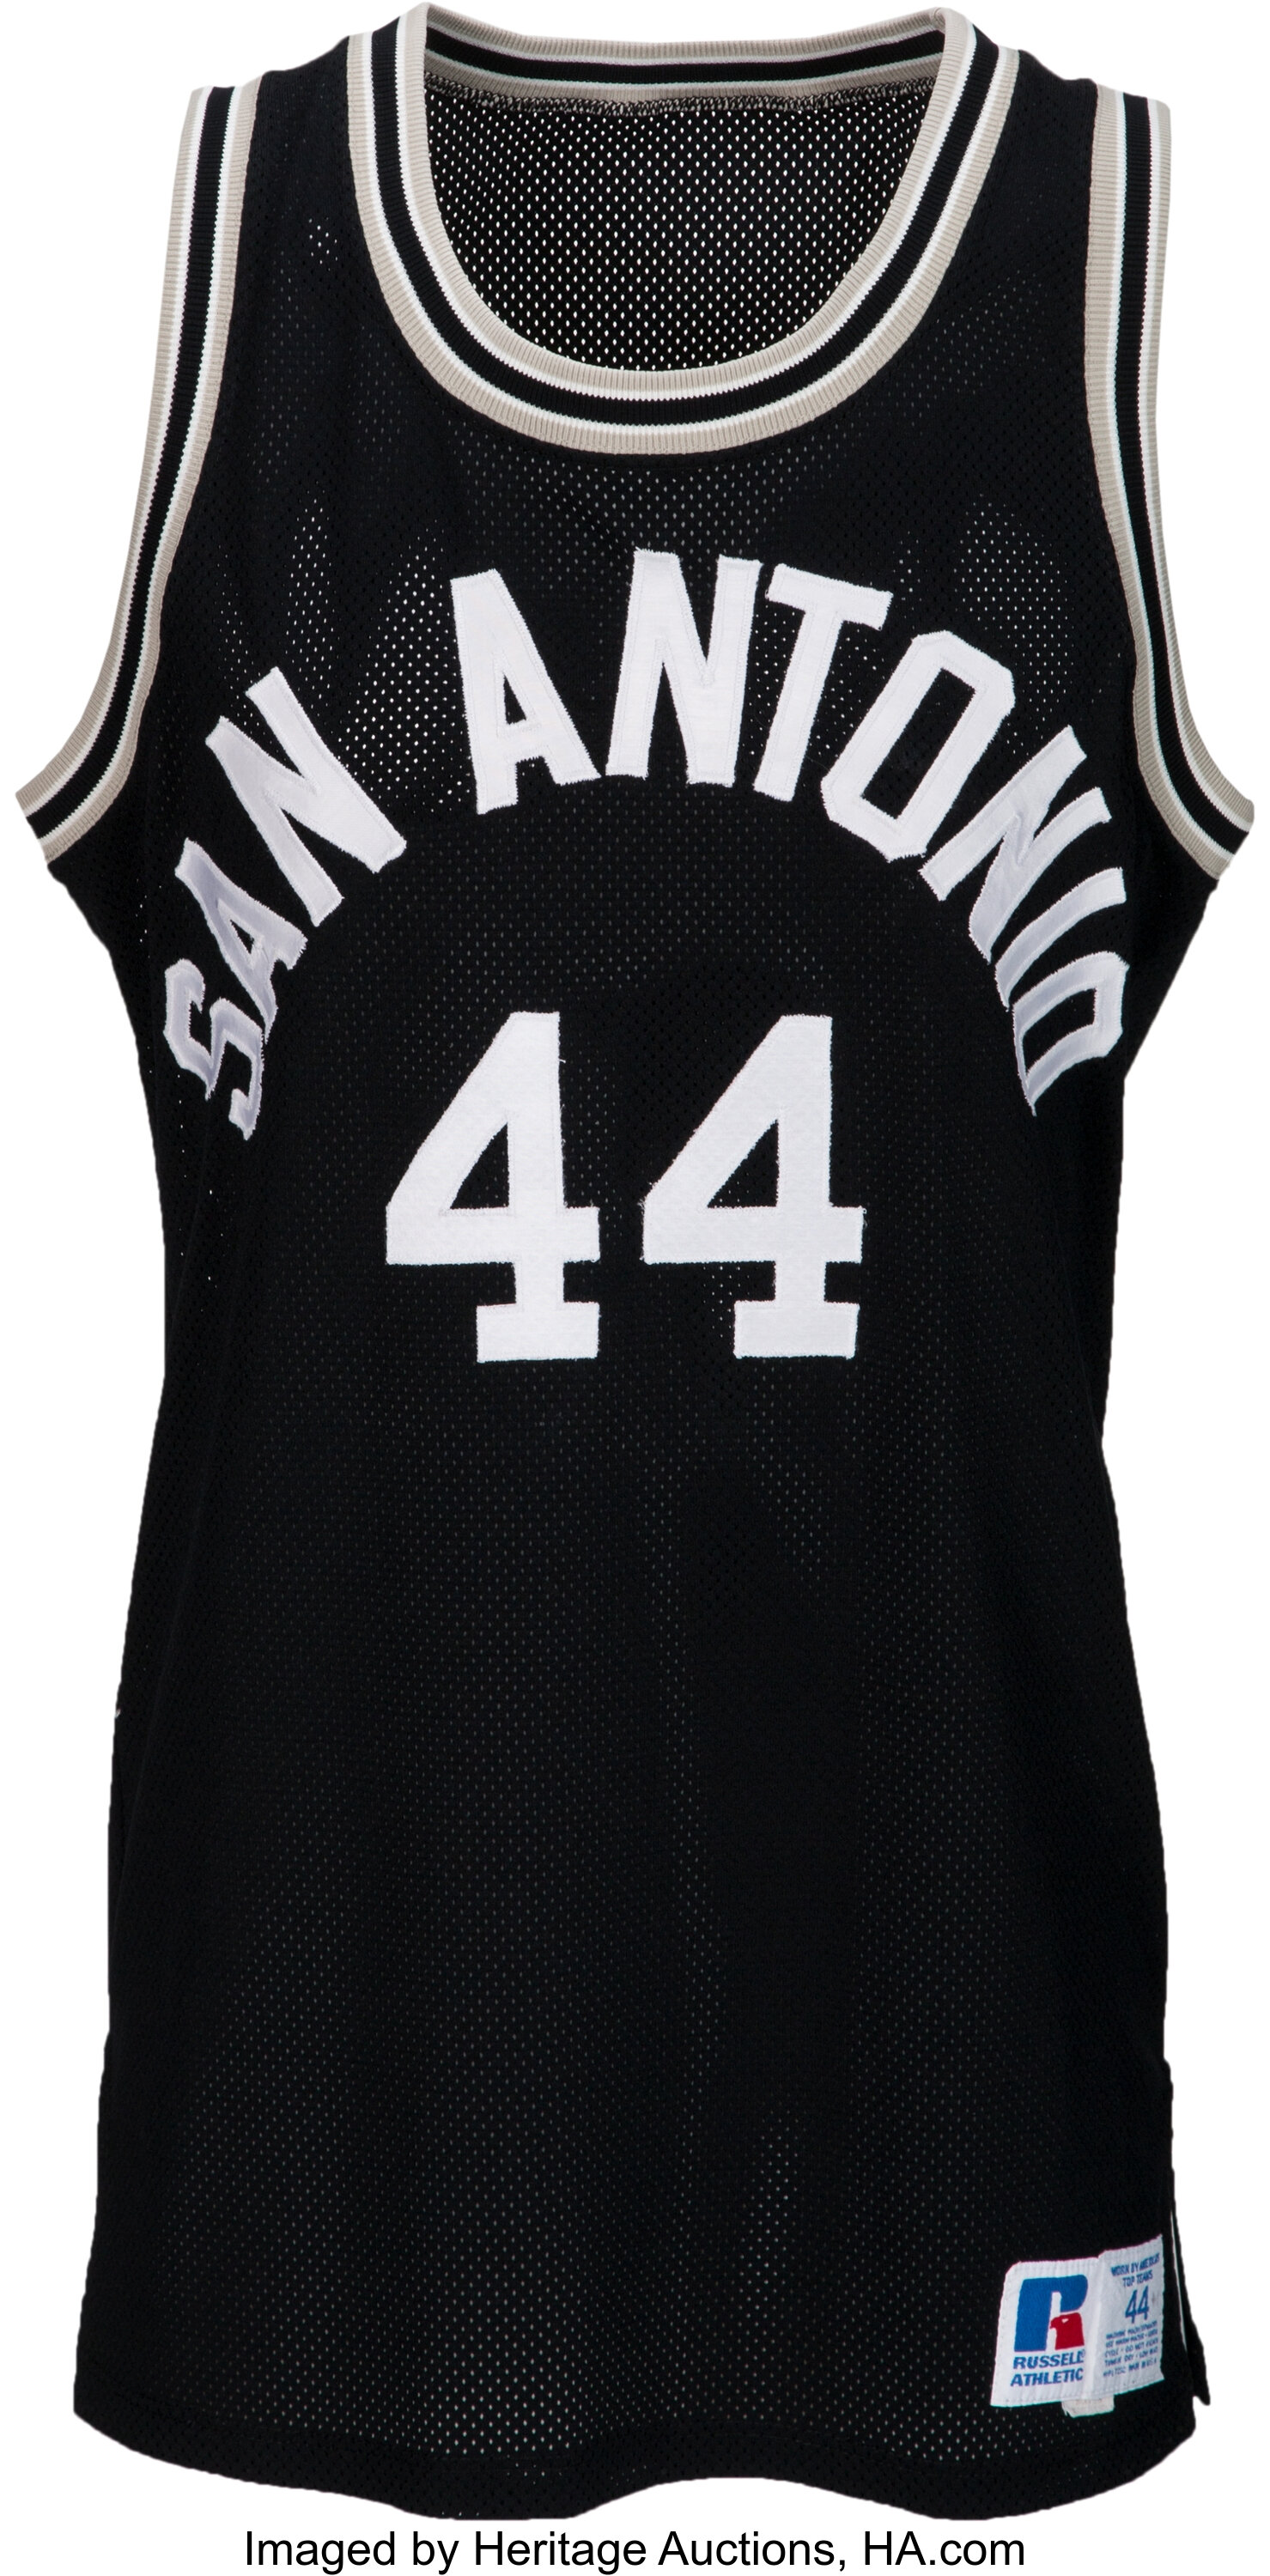 San Antonio Spurs Jerseys & Gear.